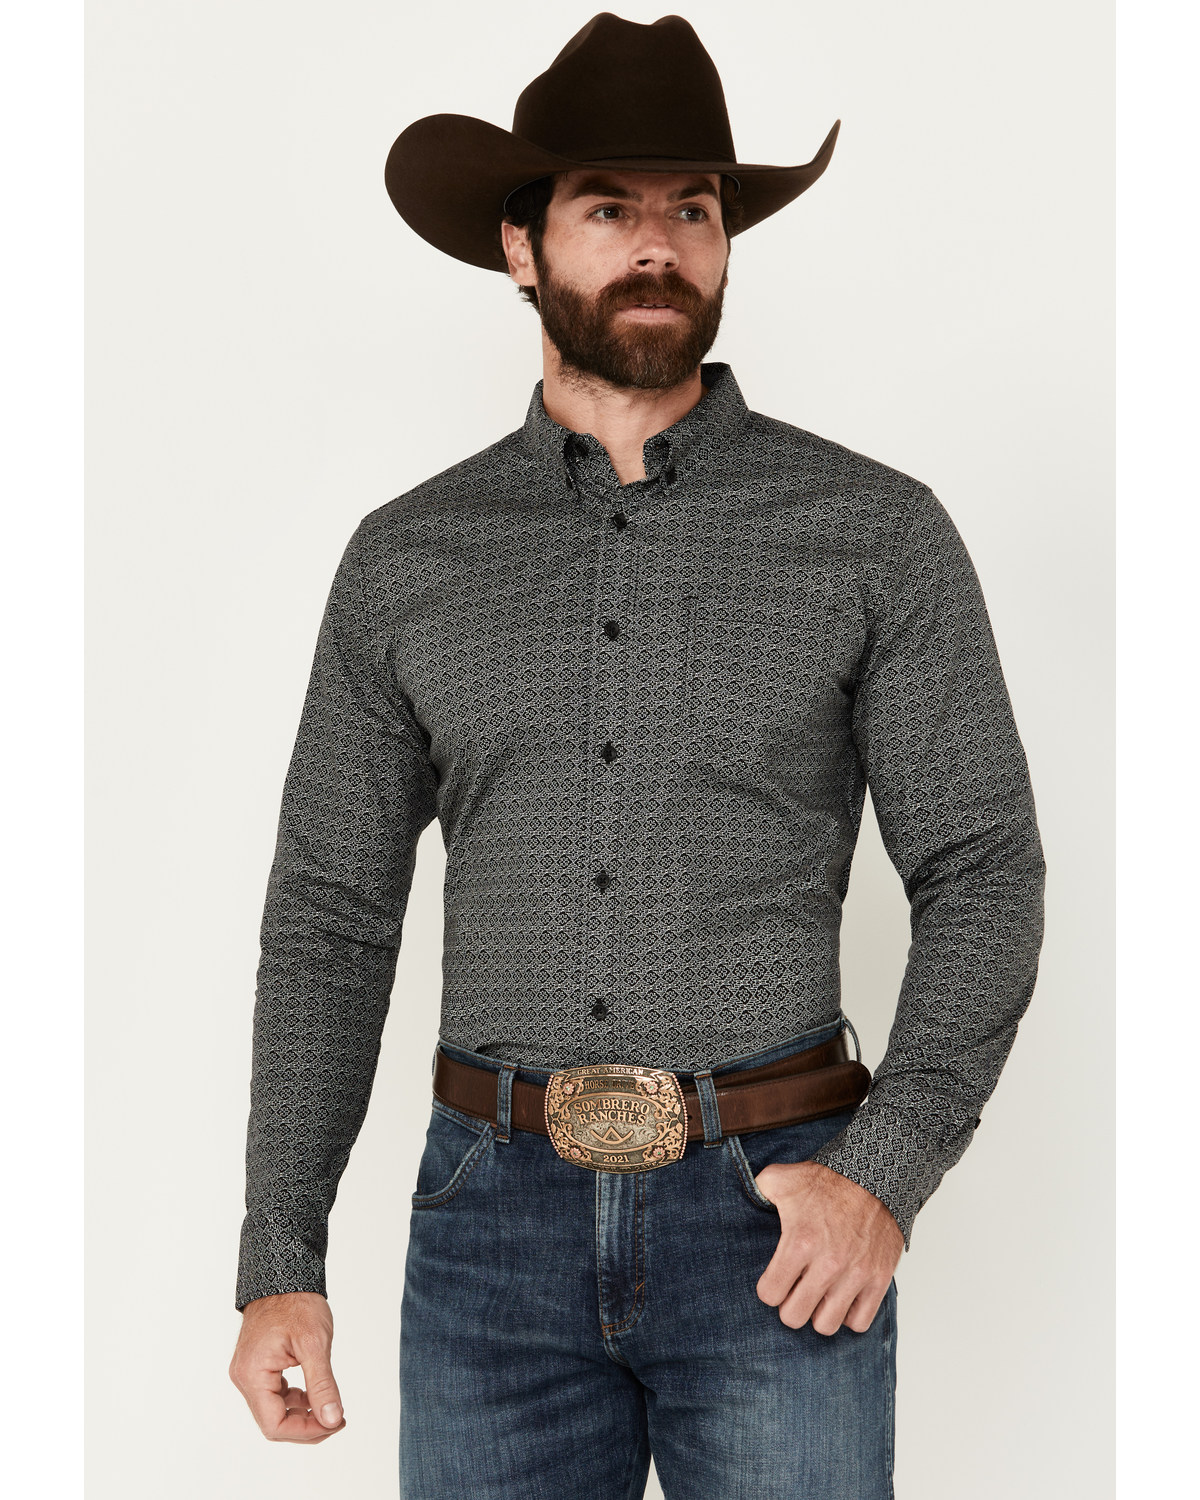 Cody James Men's Conquistador Medallion Print Long Sleeve Button-Down Shirt